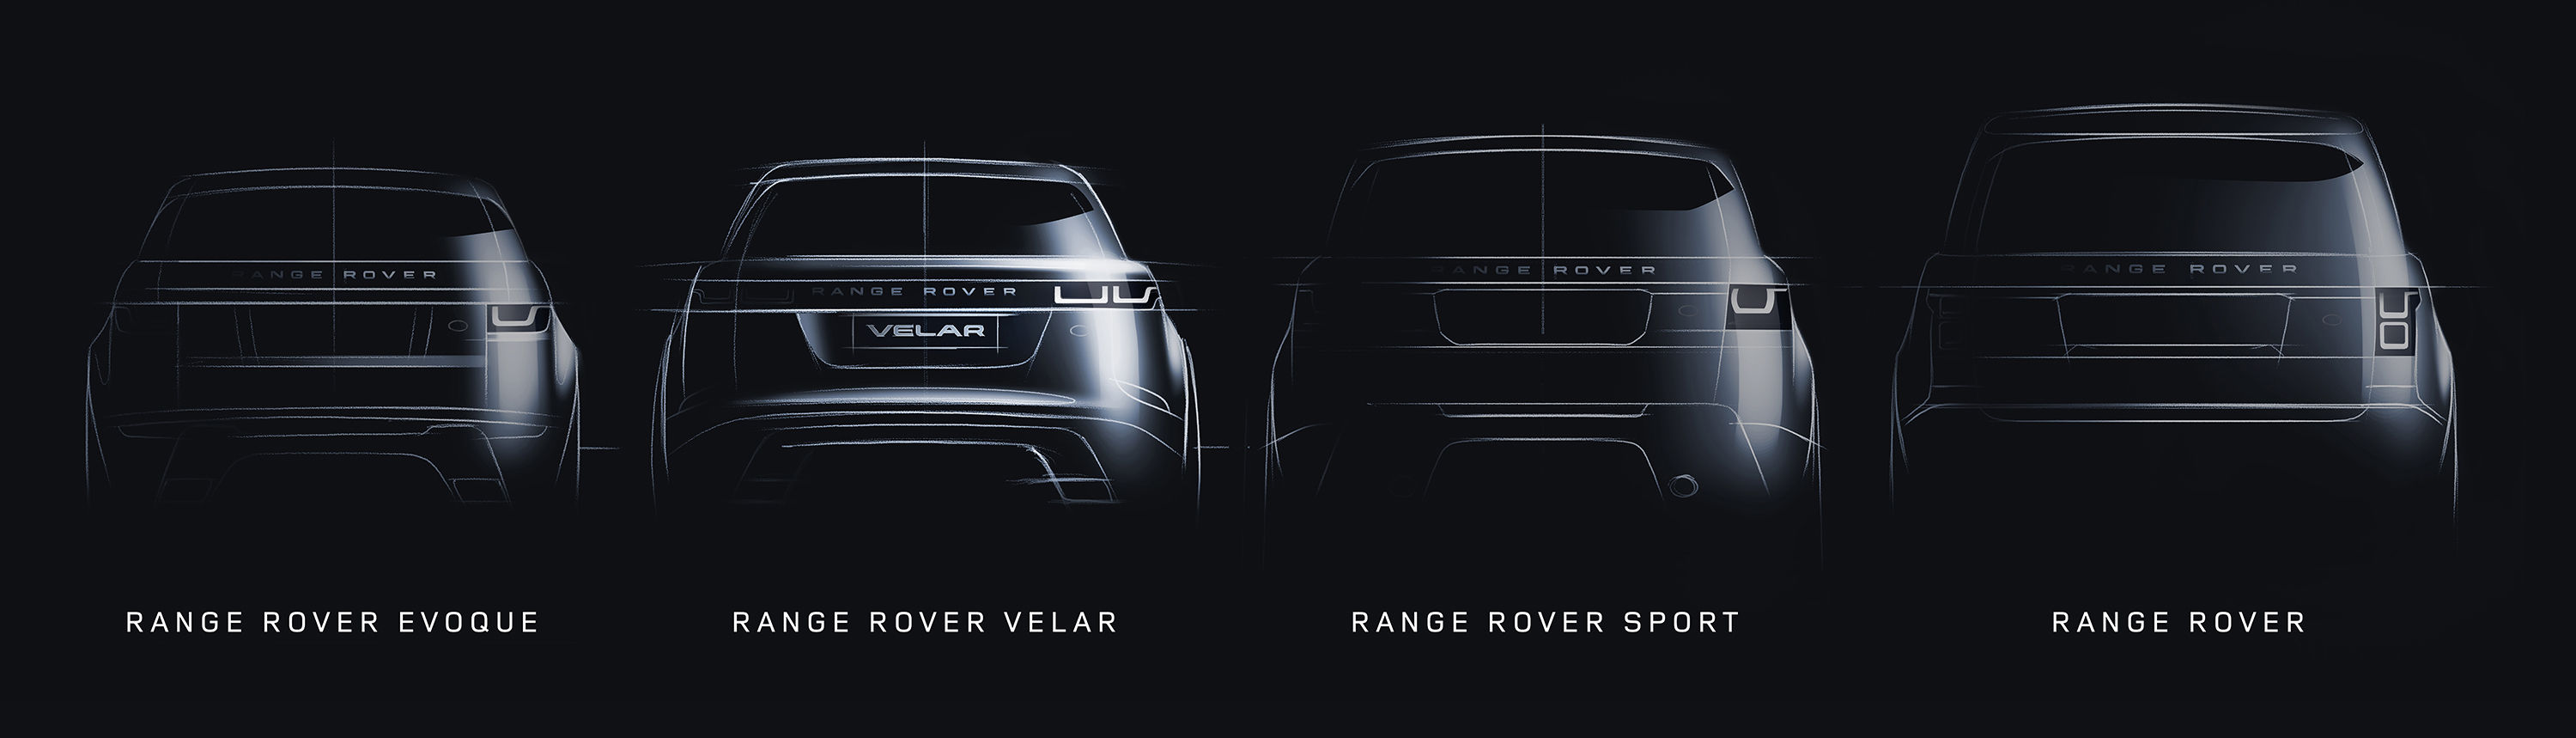 Range Rover’s Velar is your new luxury SUV